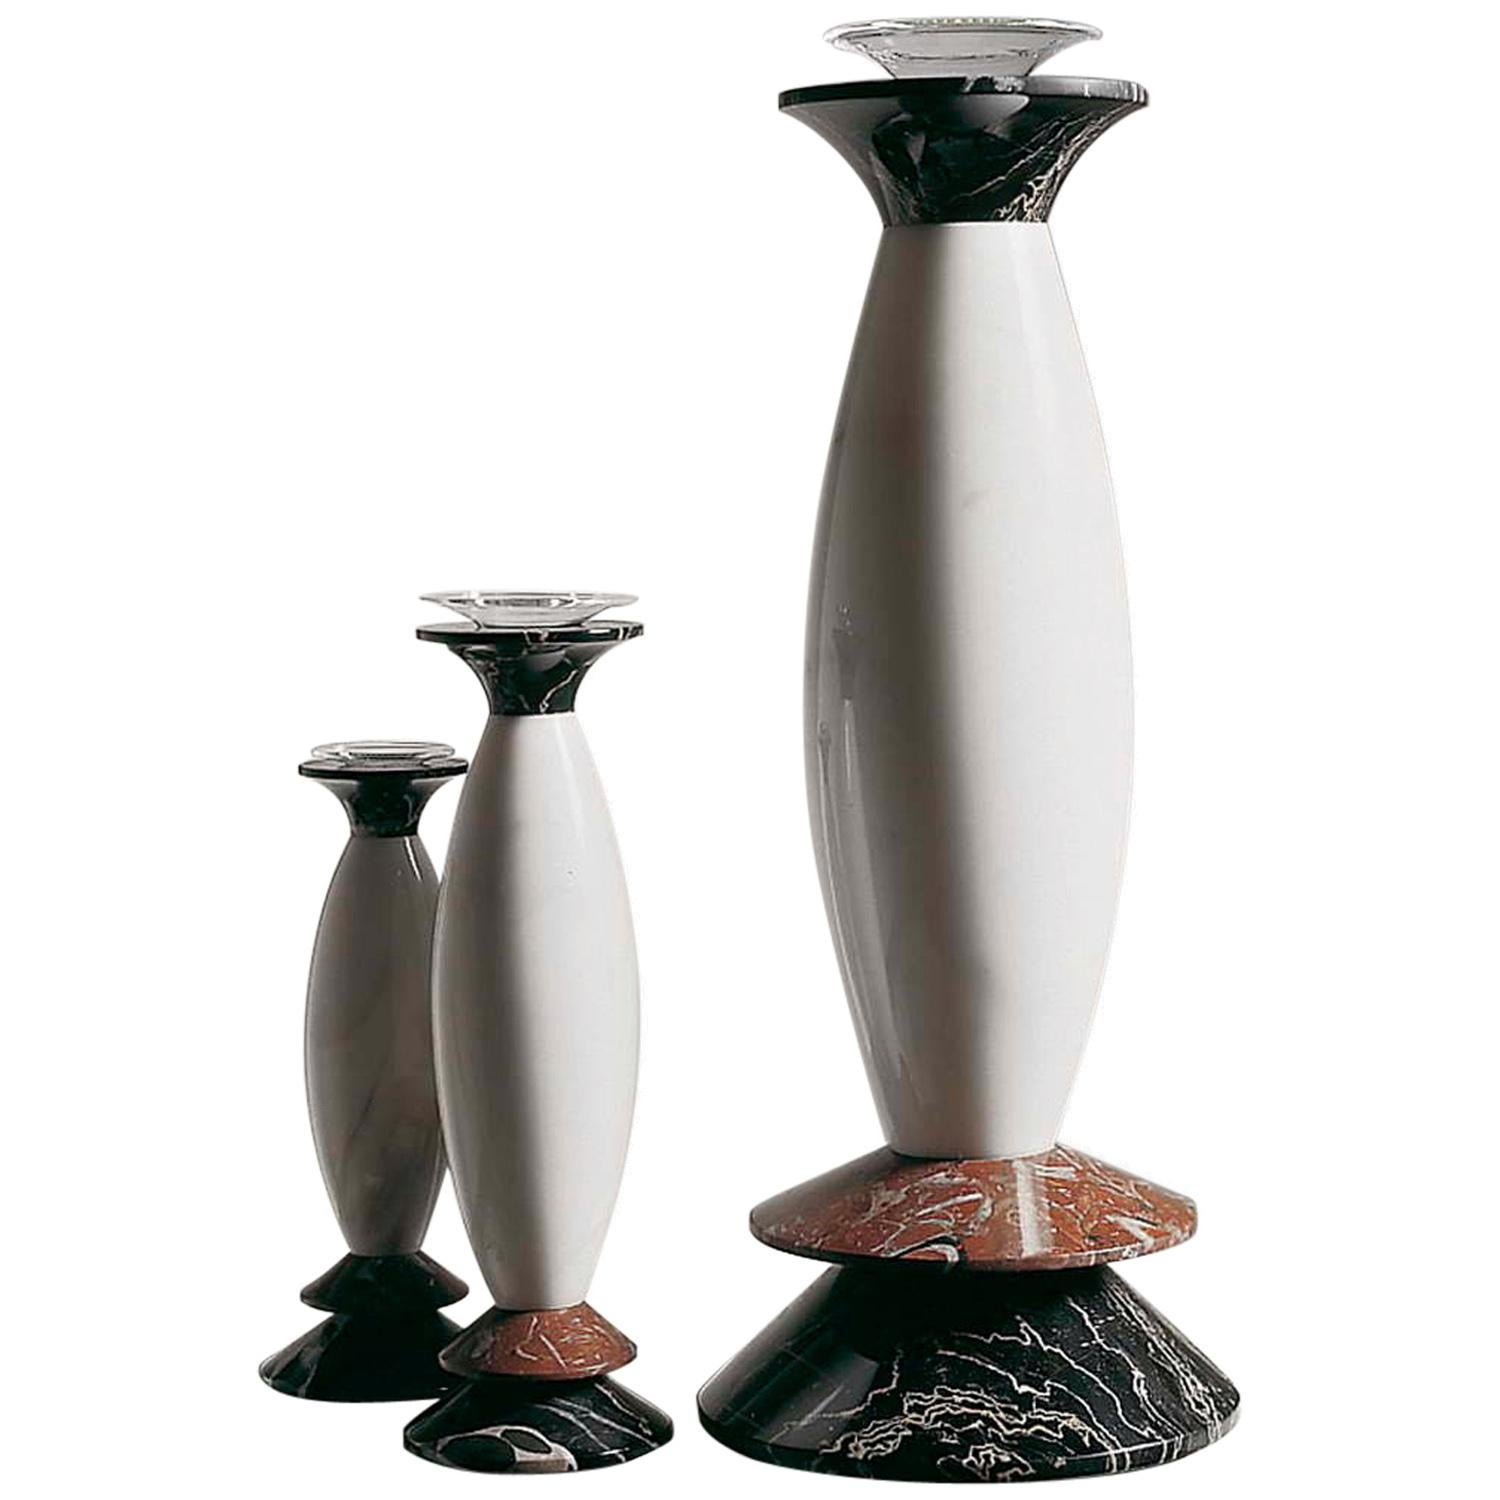 21st Century Matteo Thun Matteo Big Vase in Polichrome Marbles Blown Glass For Sale